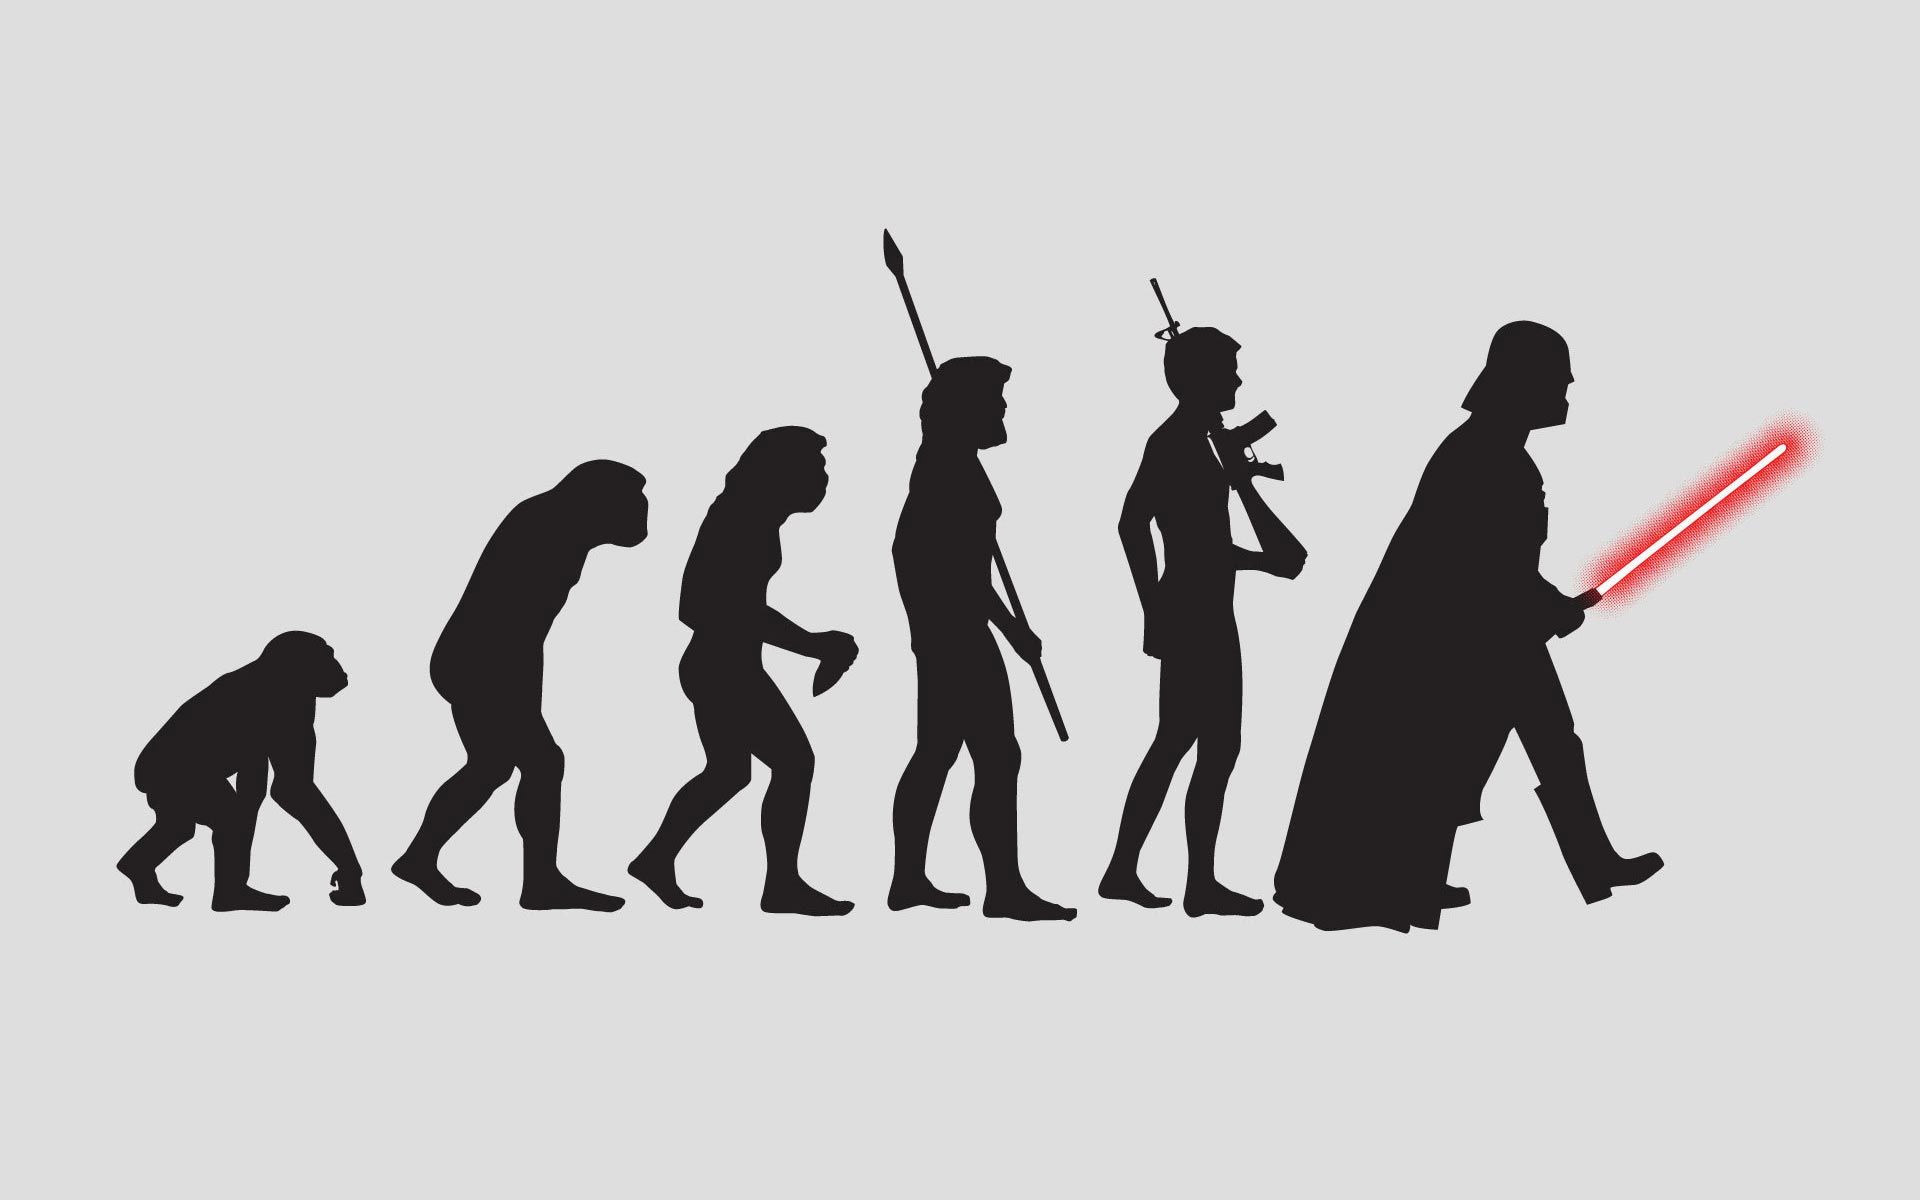 Star Wars evolution